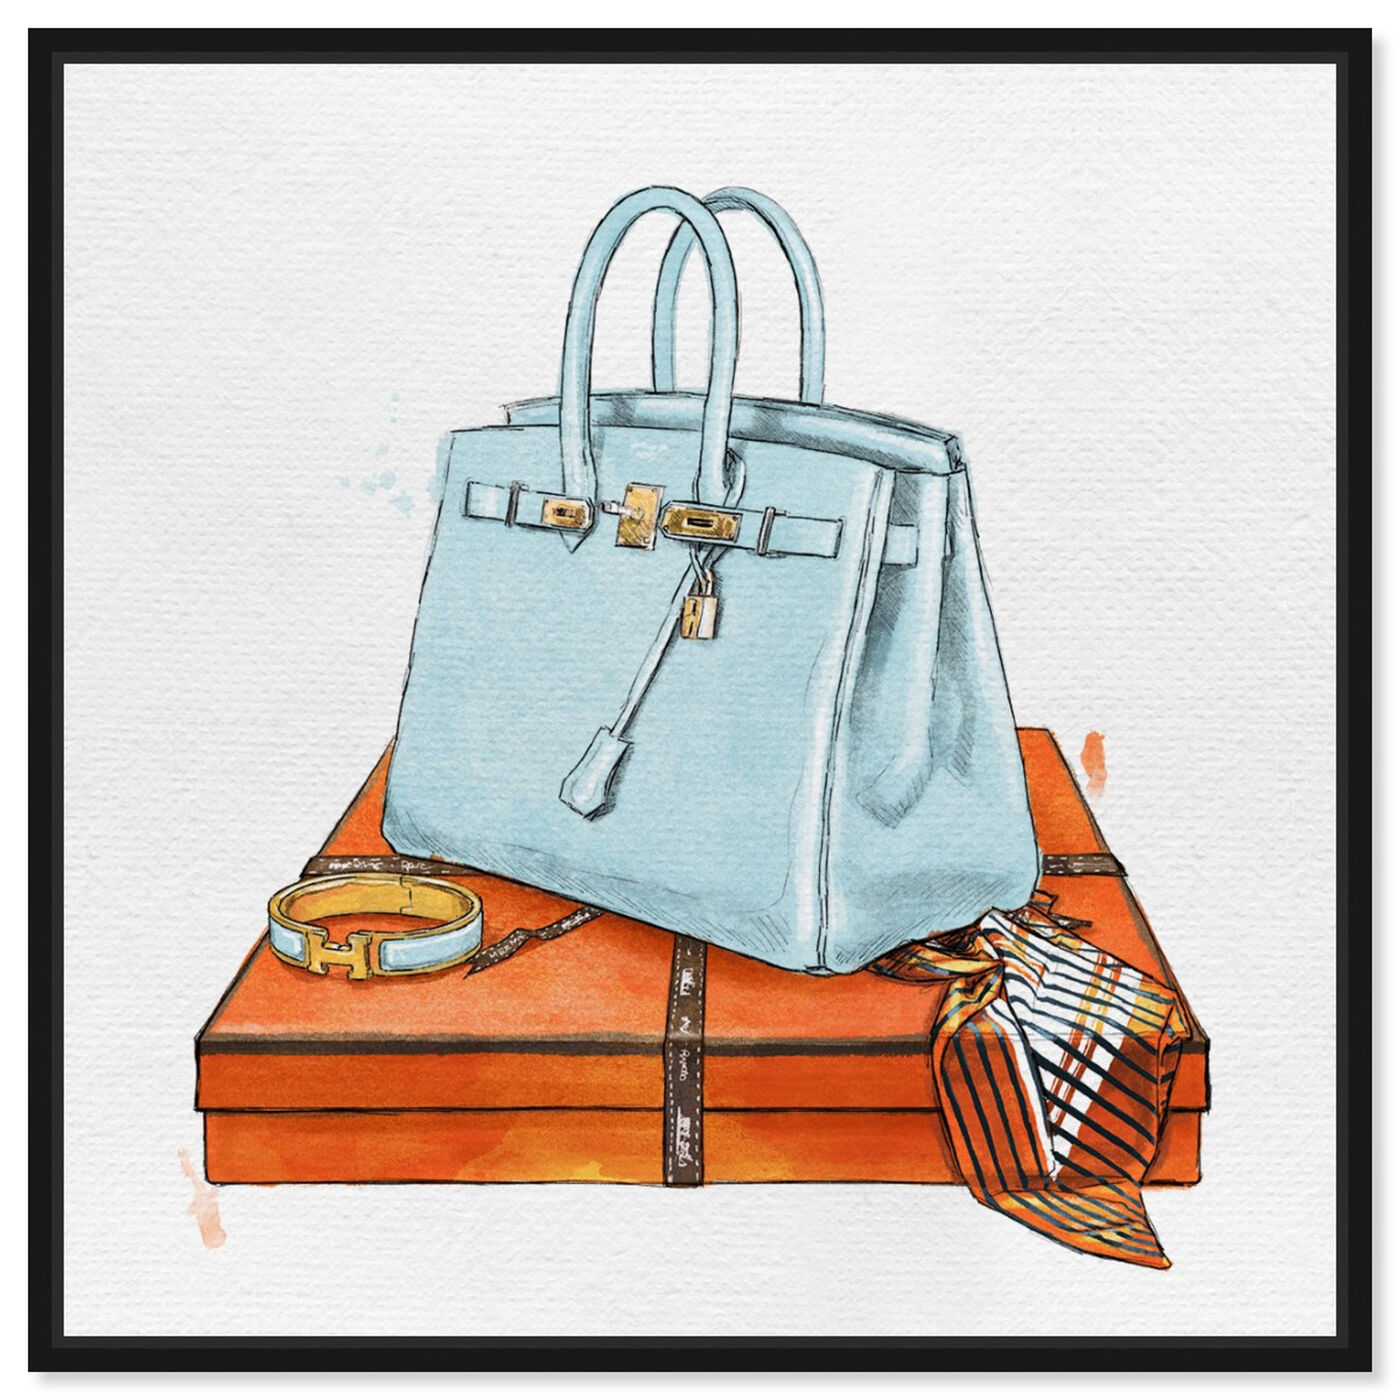 How I Got My Hermes Birkin Bag - Glam & Glitter